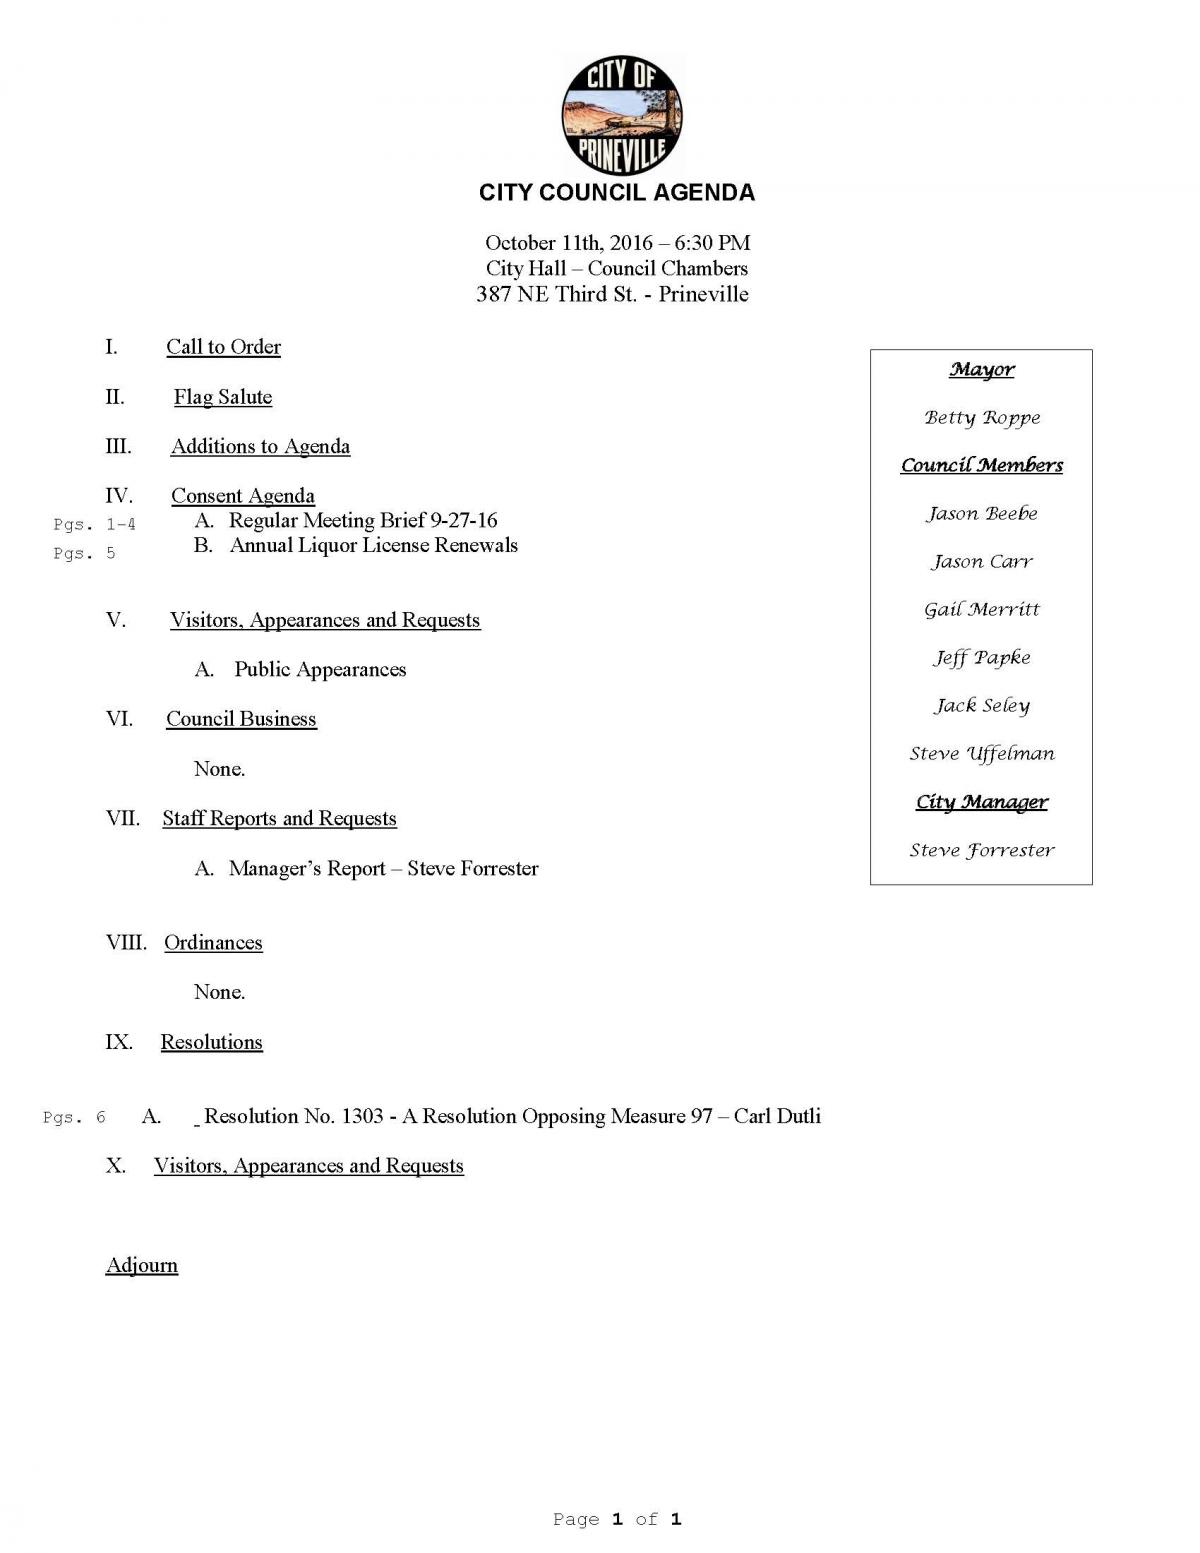 Council Agenda 10-11-16